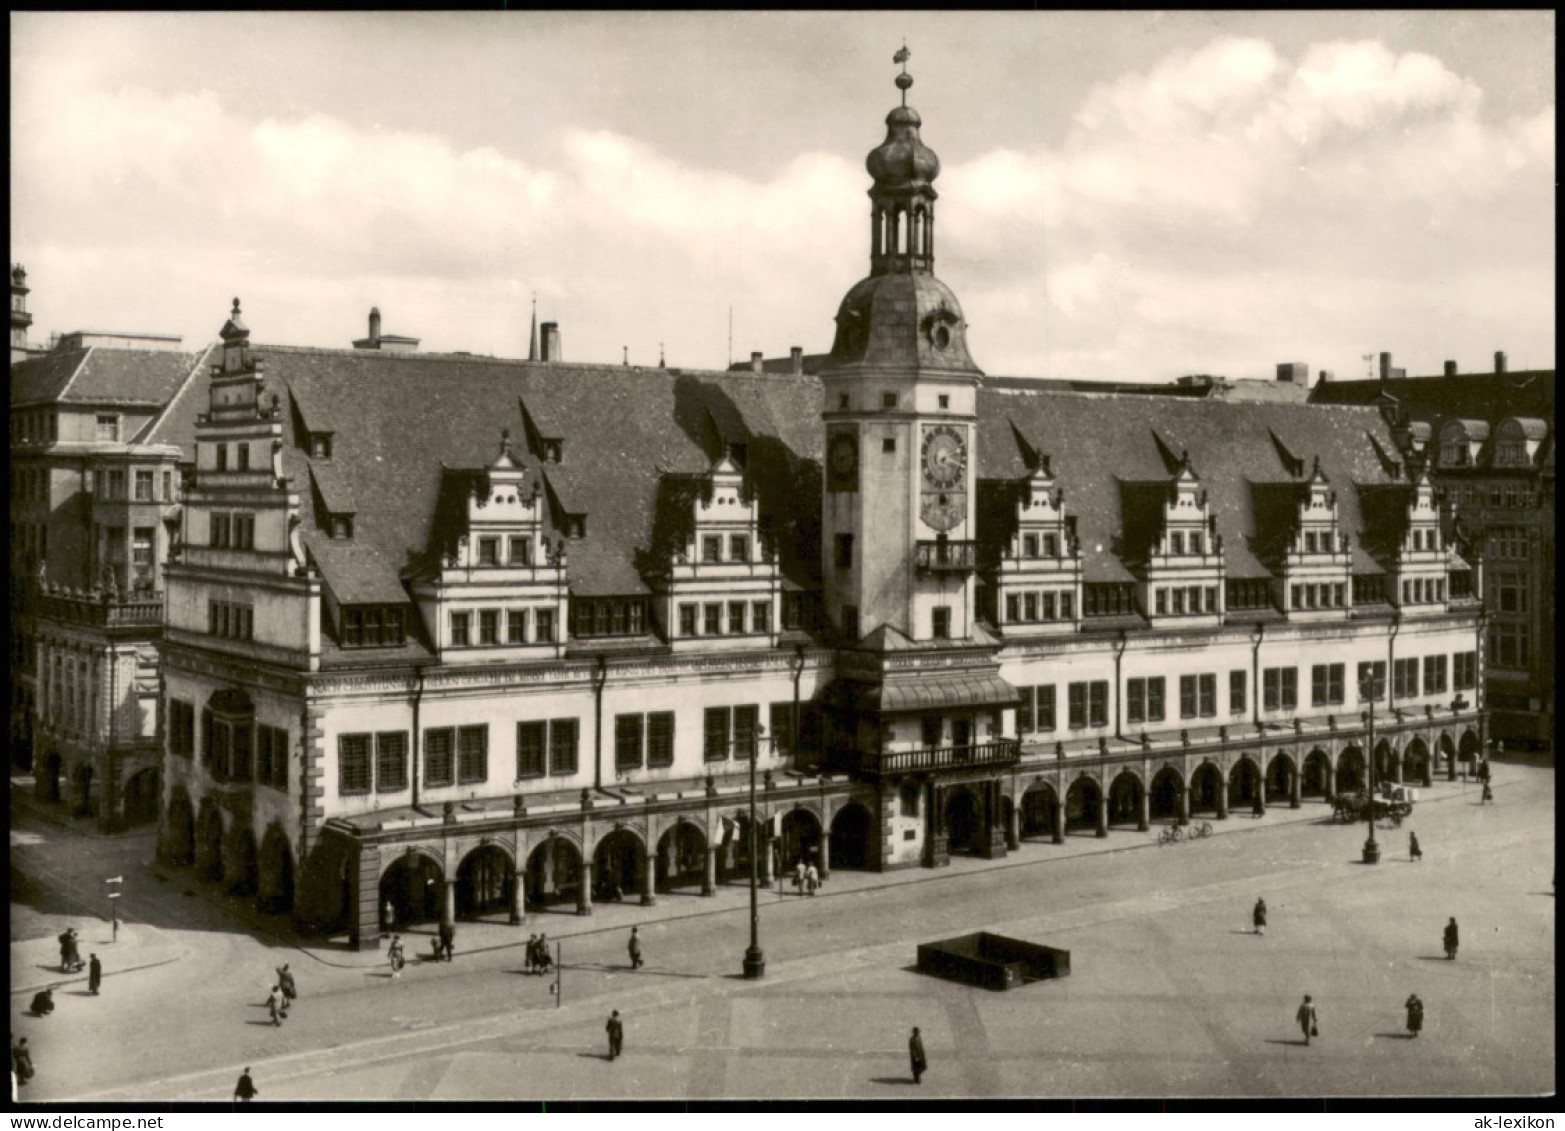 Ansichtskarte Leipzig Altes Rathaus 1962 - Leipzig